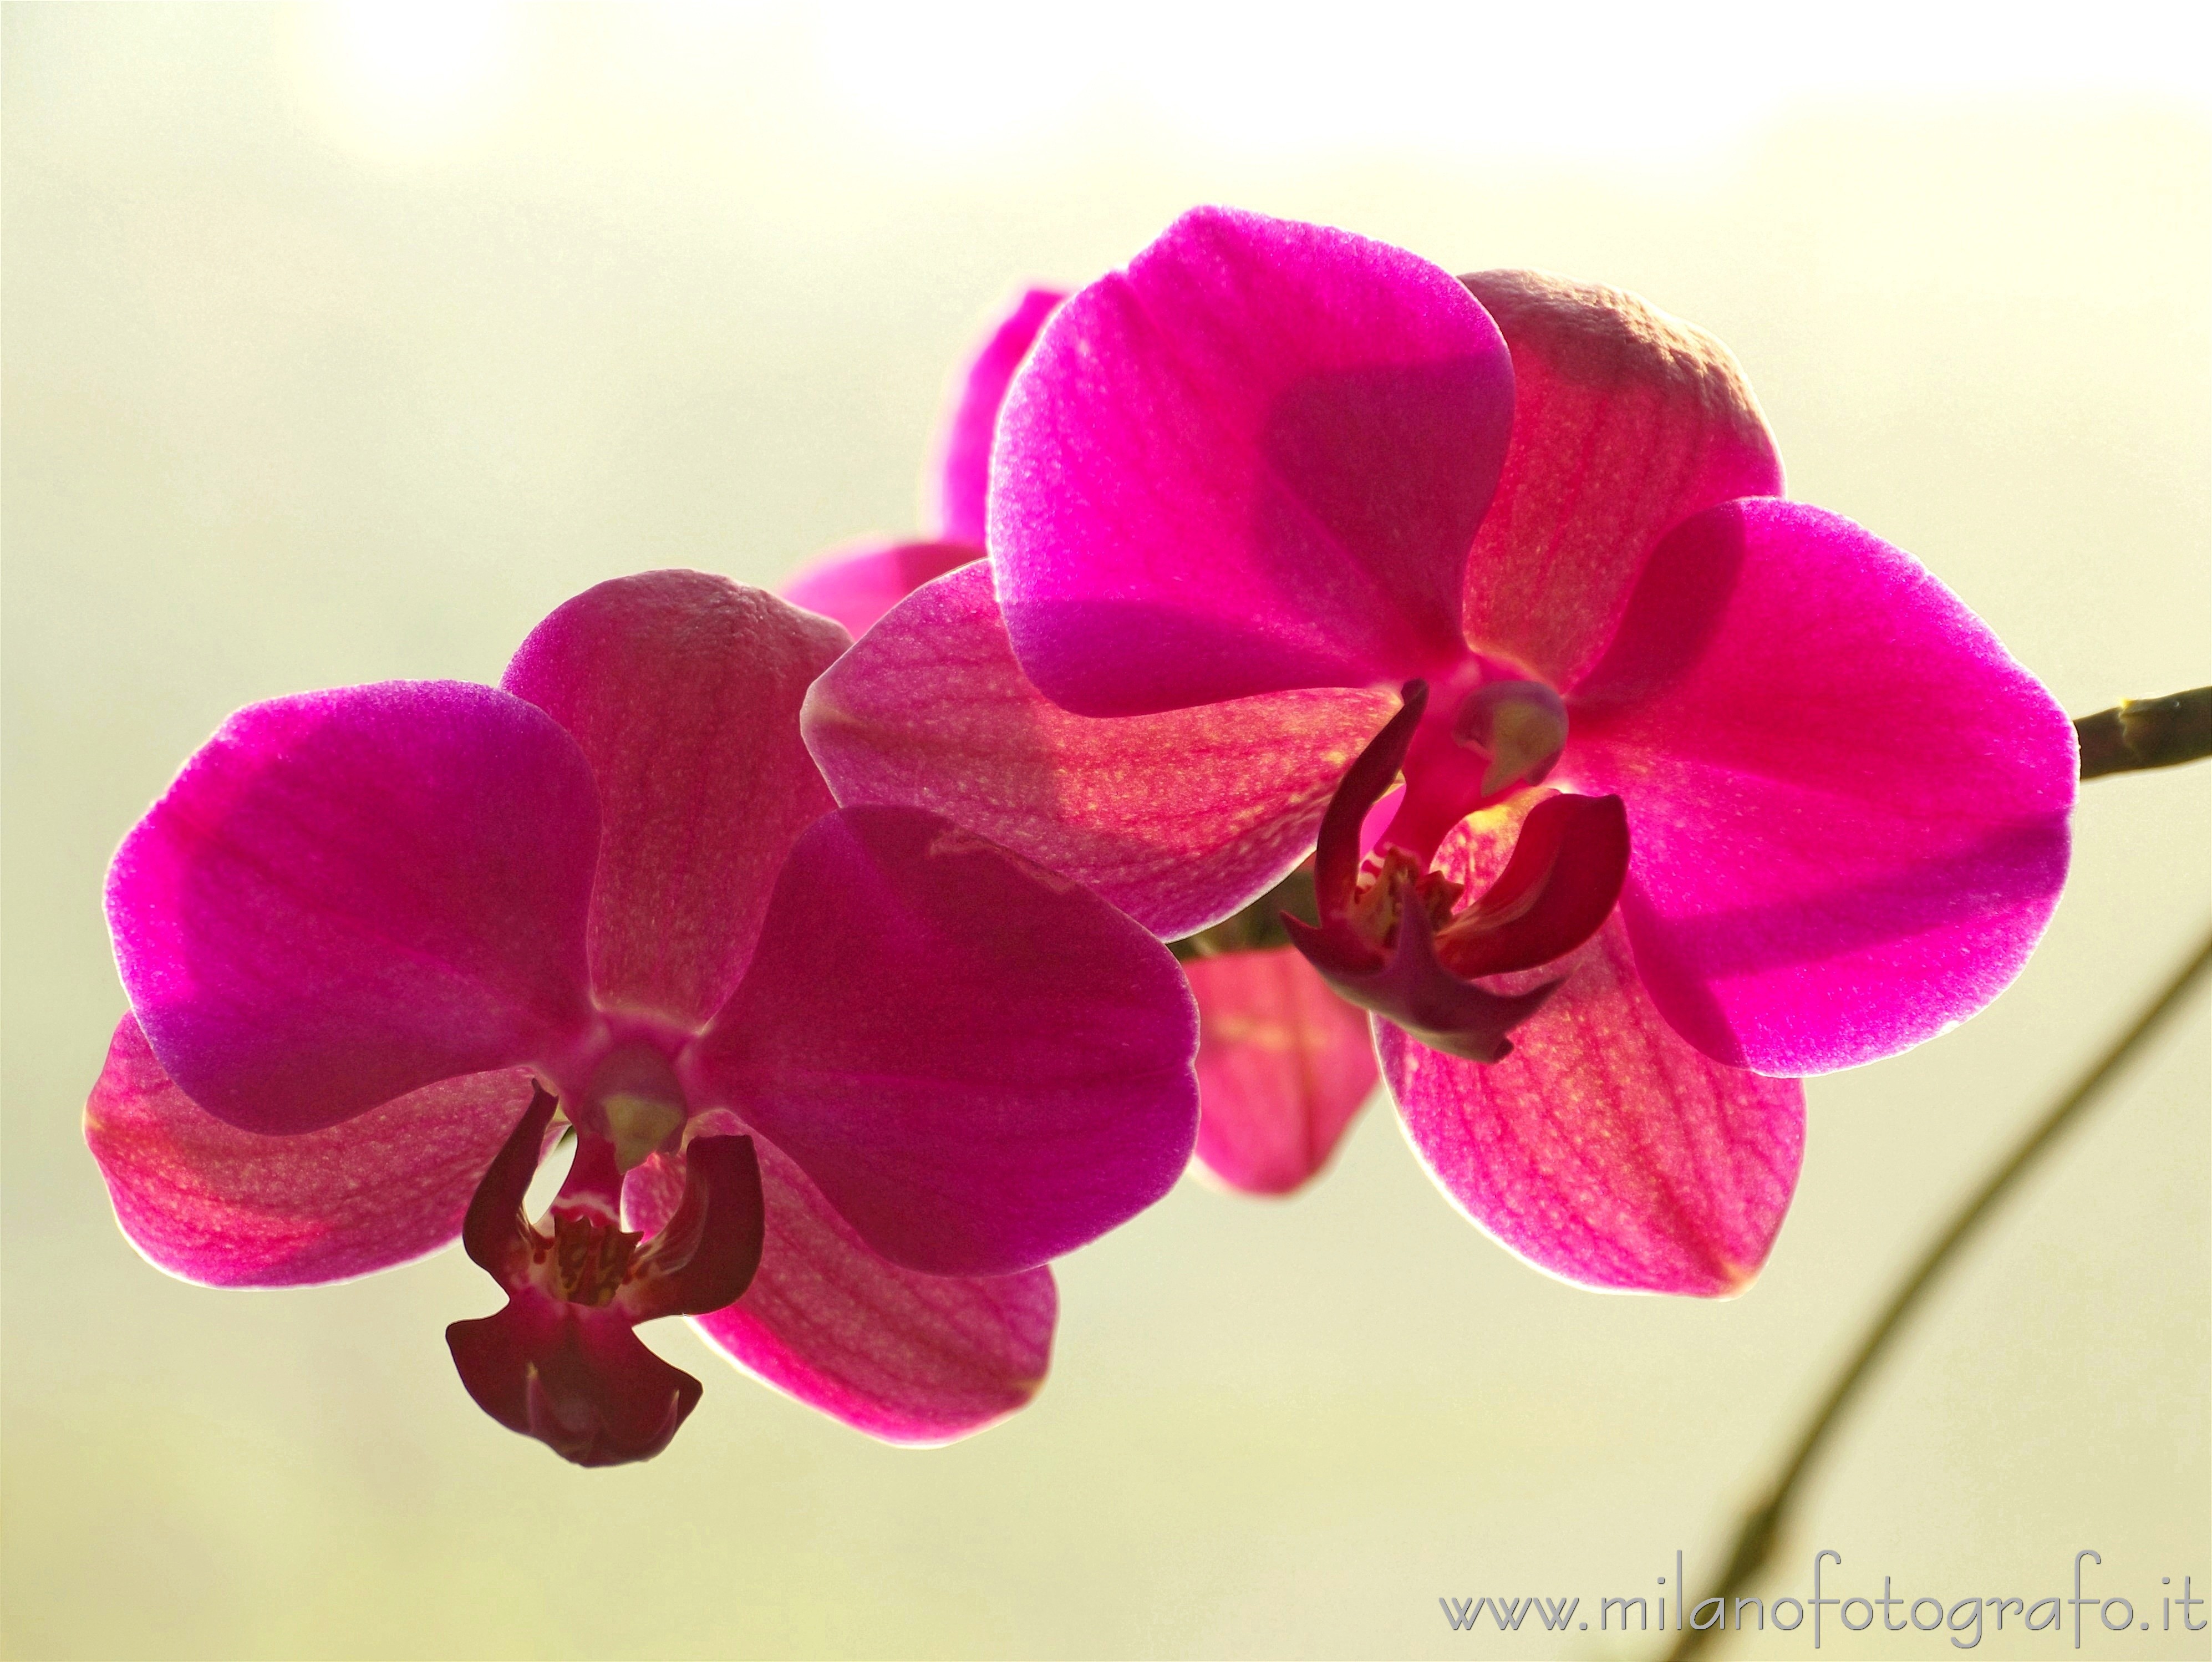 Milan (Italy): Violet Phalaenopsis flowers - Milan (Italy)